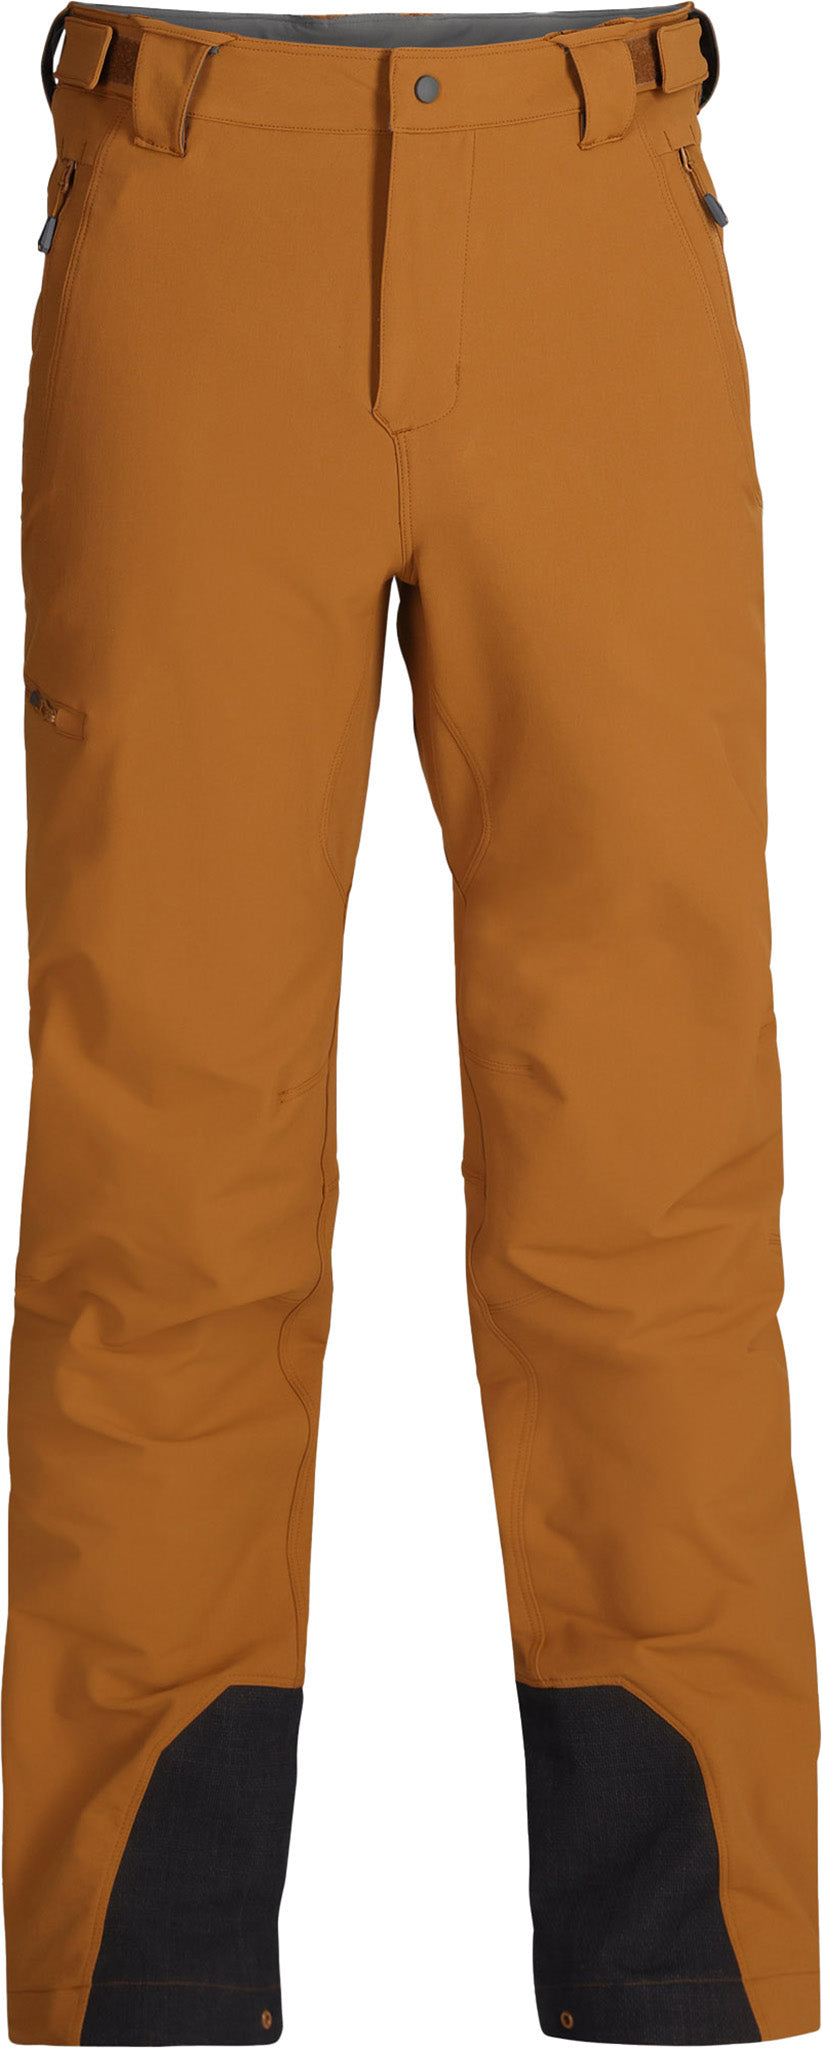 Men's Fleece Lined Outdoor Cargo Pants Casual Work Ski Hiking Pants wi